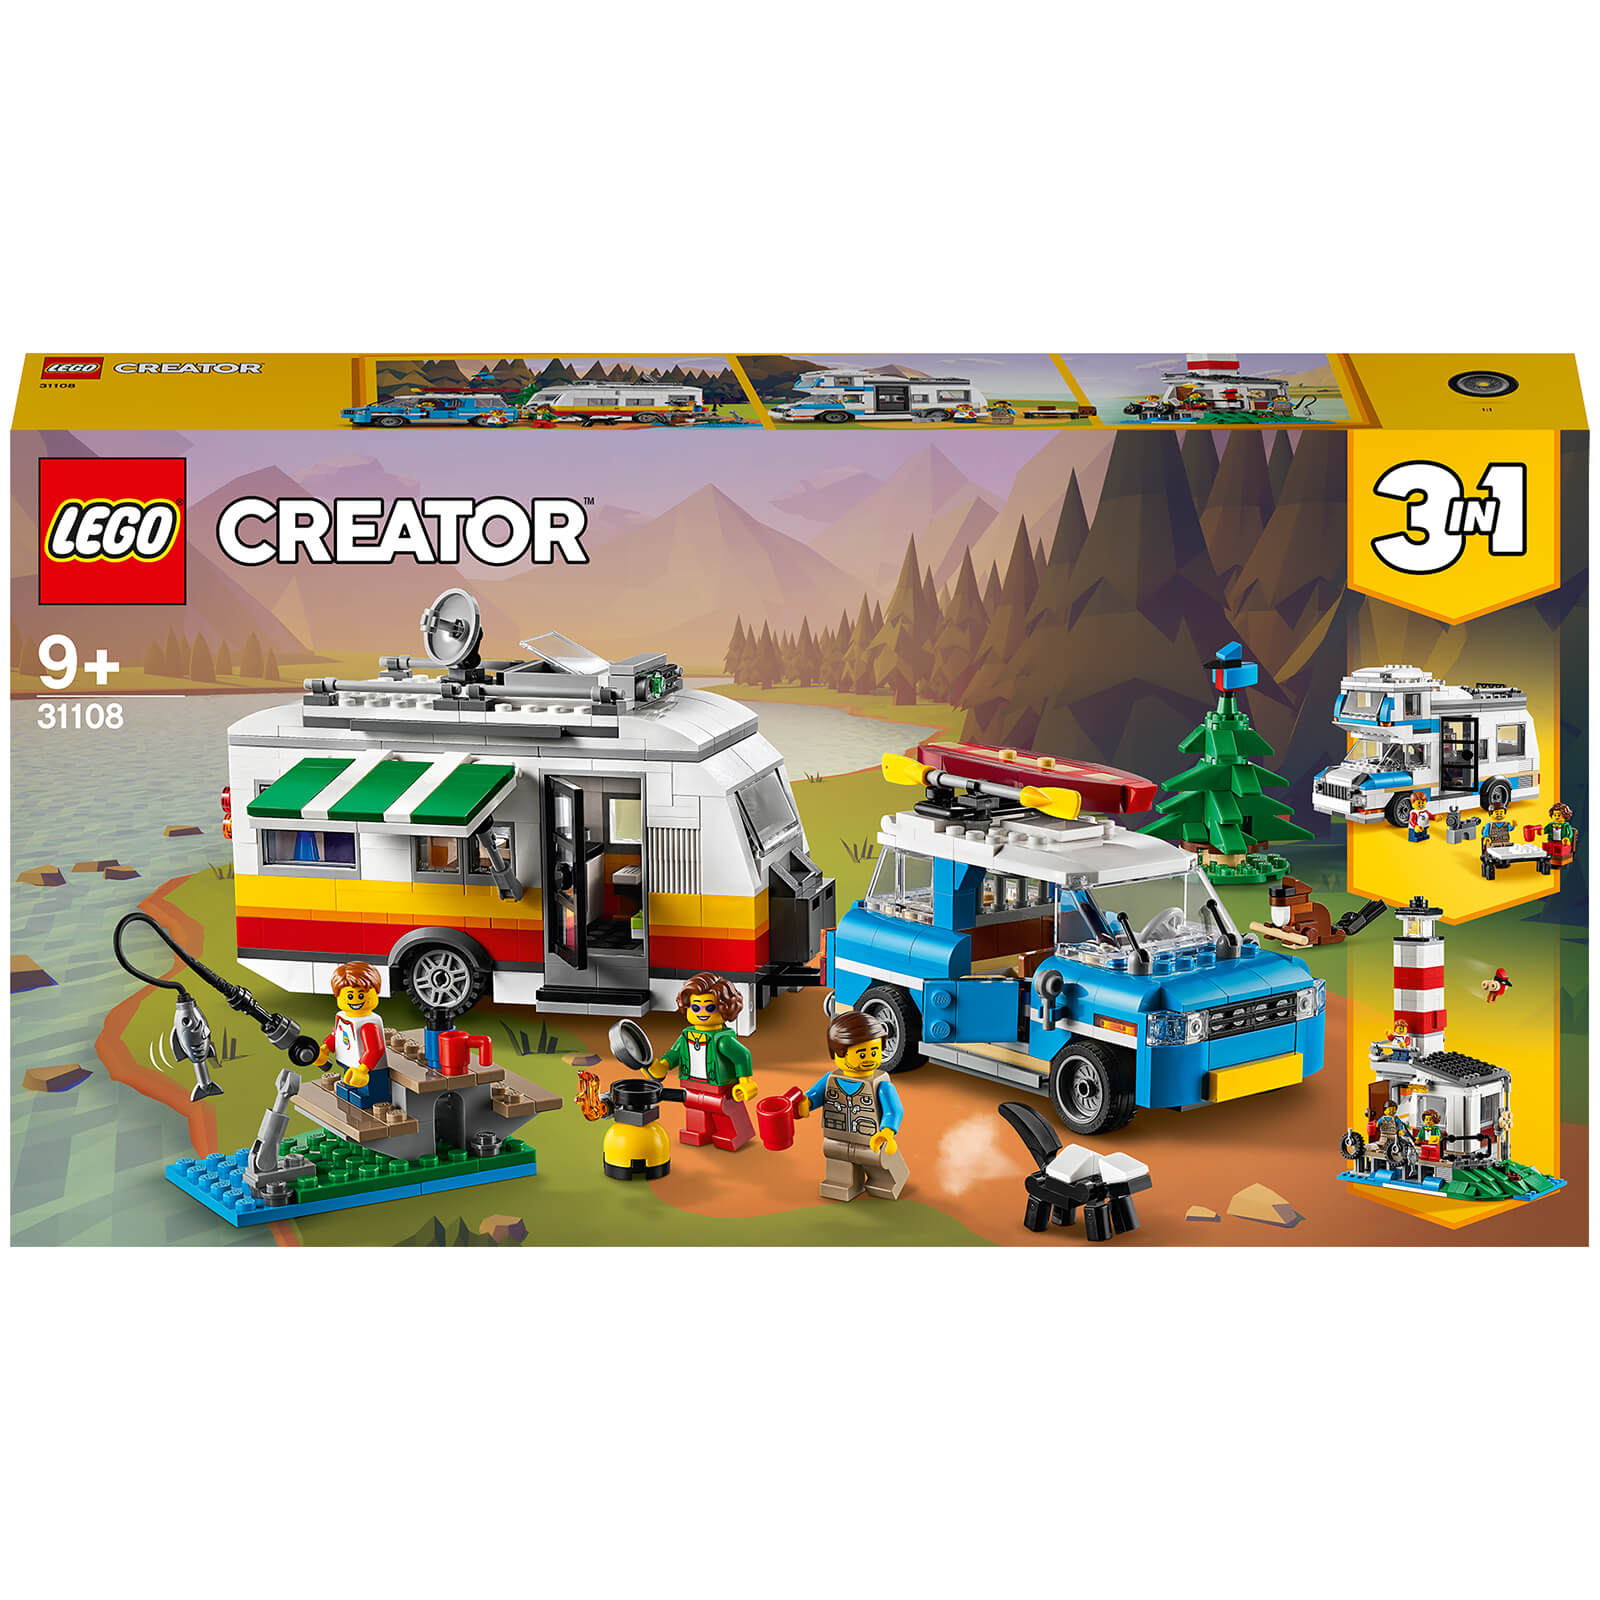 Lego Creator: 3in1 Caravan Family Holiday Car Toy (31108)